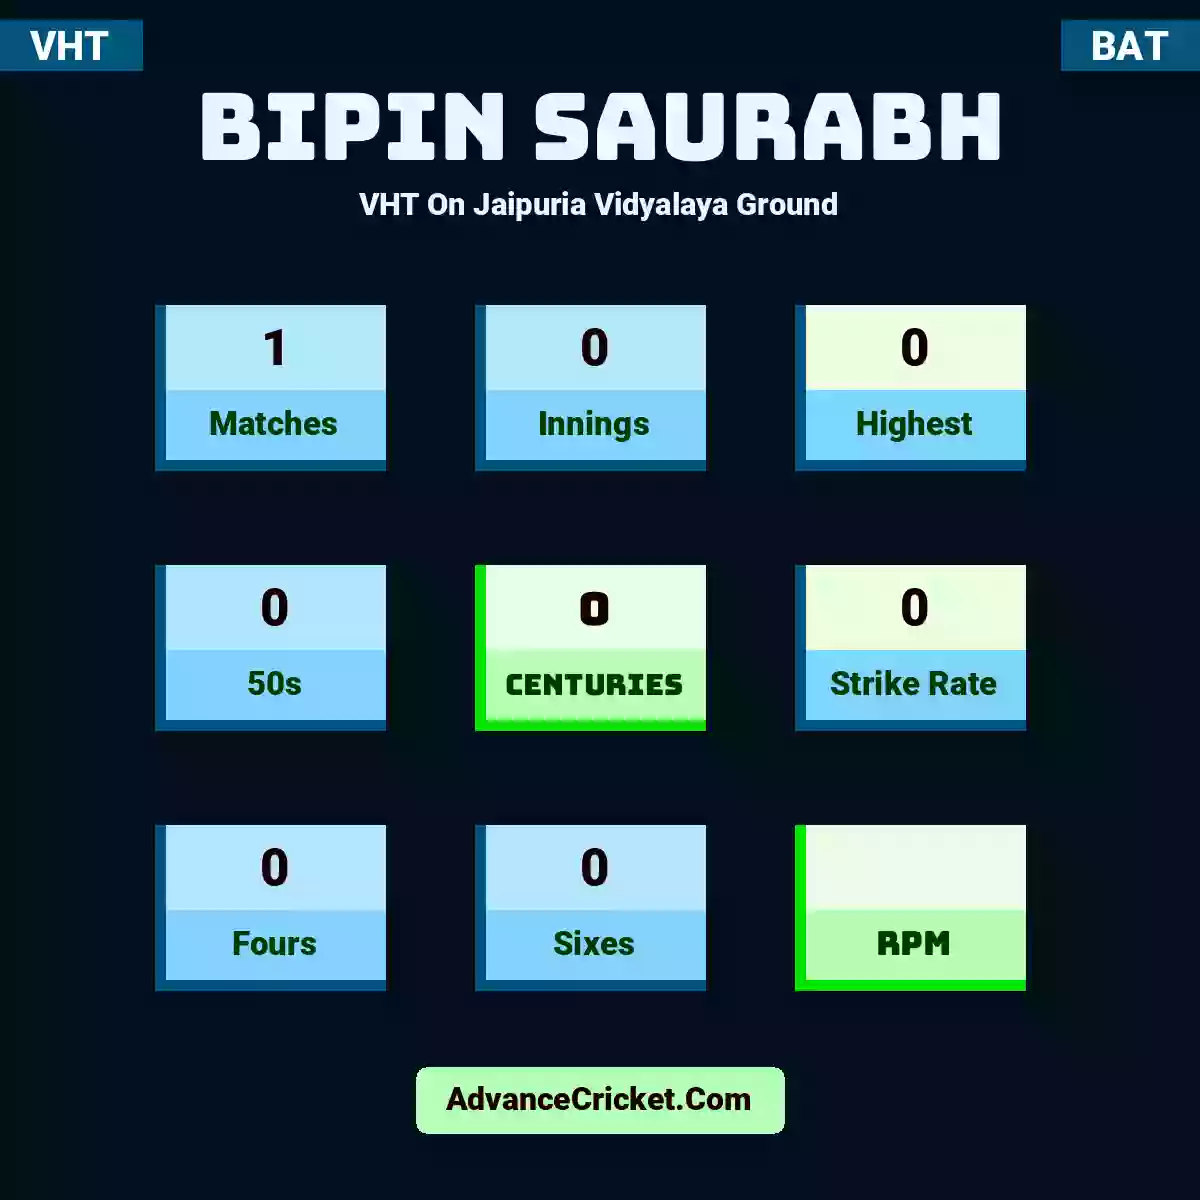 Bipin Saurabh VHT  On Jaipuria Vidyalaya Ground, Bipin Saurabh played 1 matches, scored 0 runs as highest, 0 half-centuries, and 0 centuries, with a strike rate of 0. B.Saurabh hit 0 fours and 0 sixes.